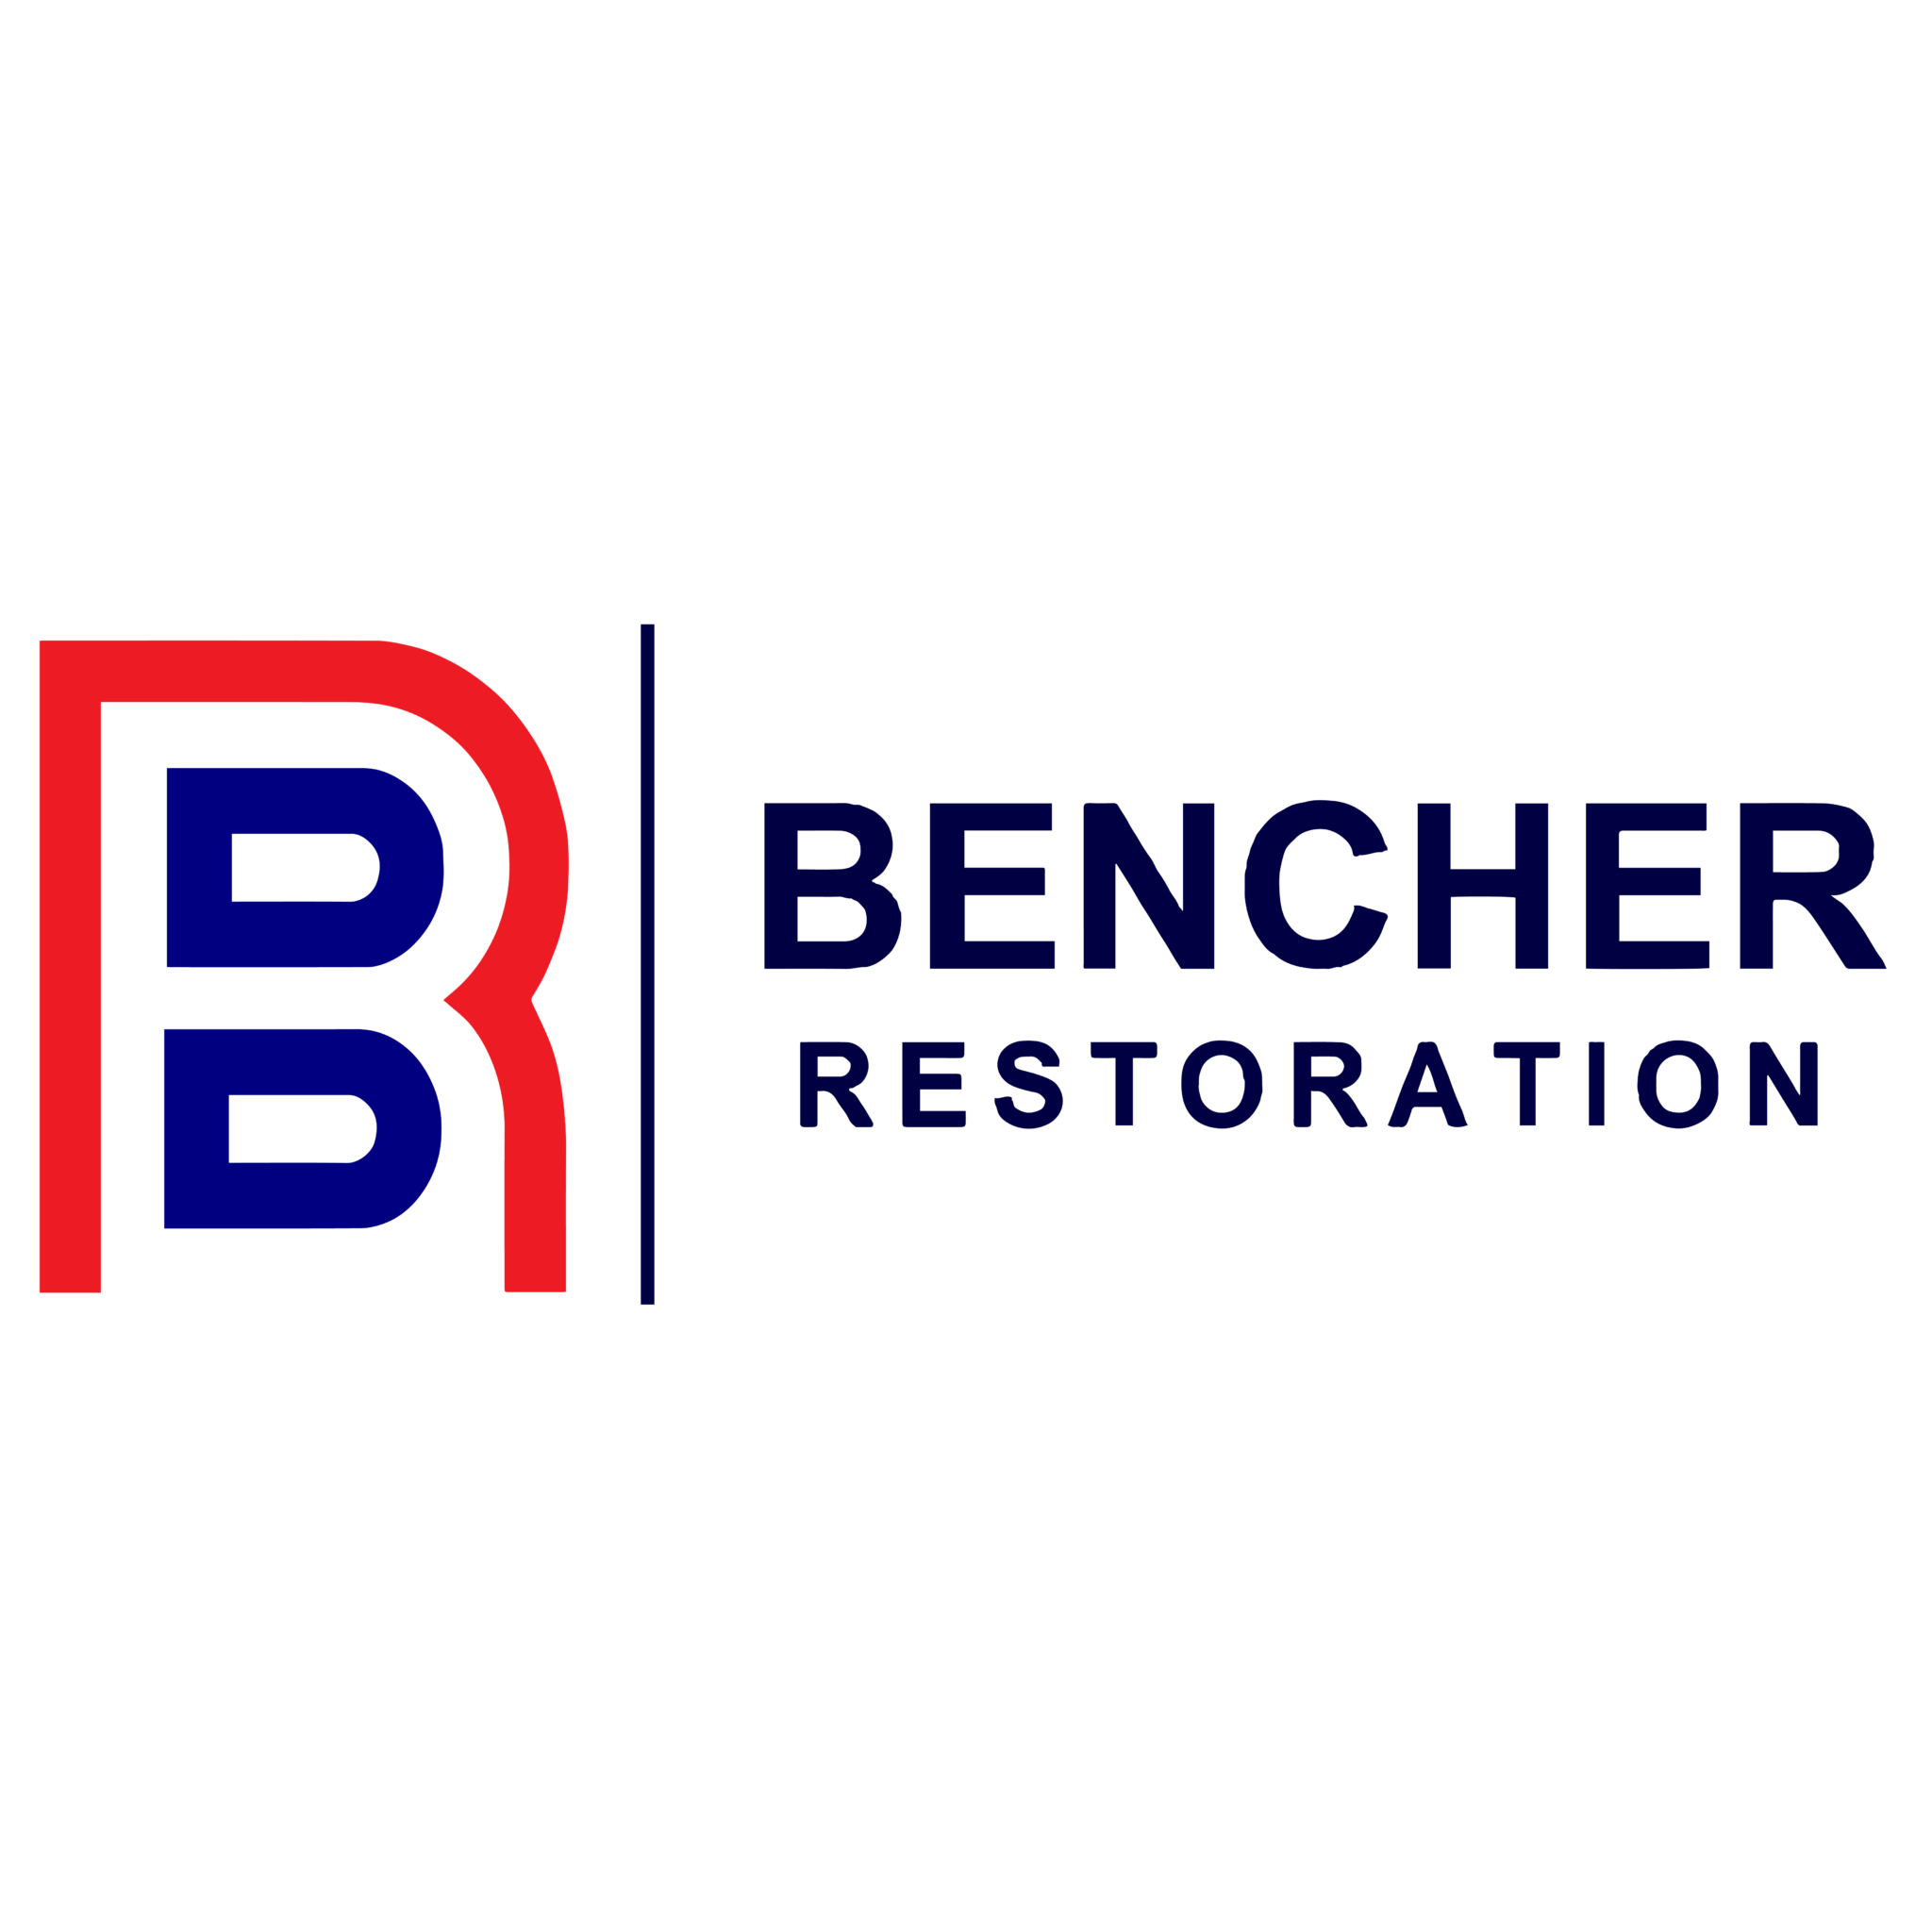 Bencher Restoration - Fort Collins, CO 80525 - (970)694-6795 | ShowMeLocal.com